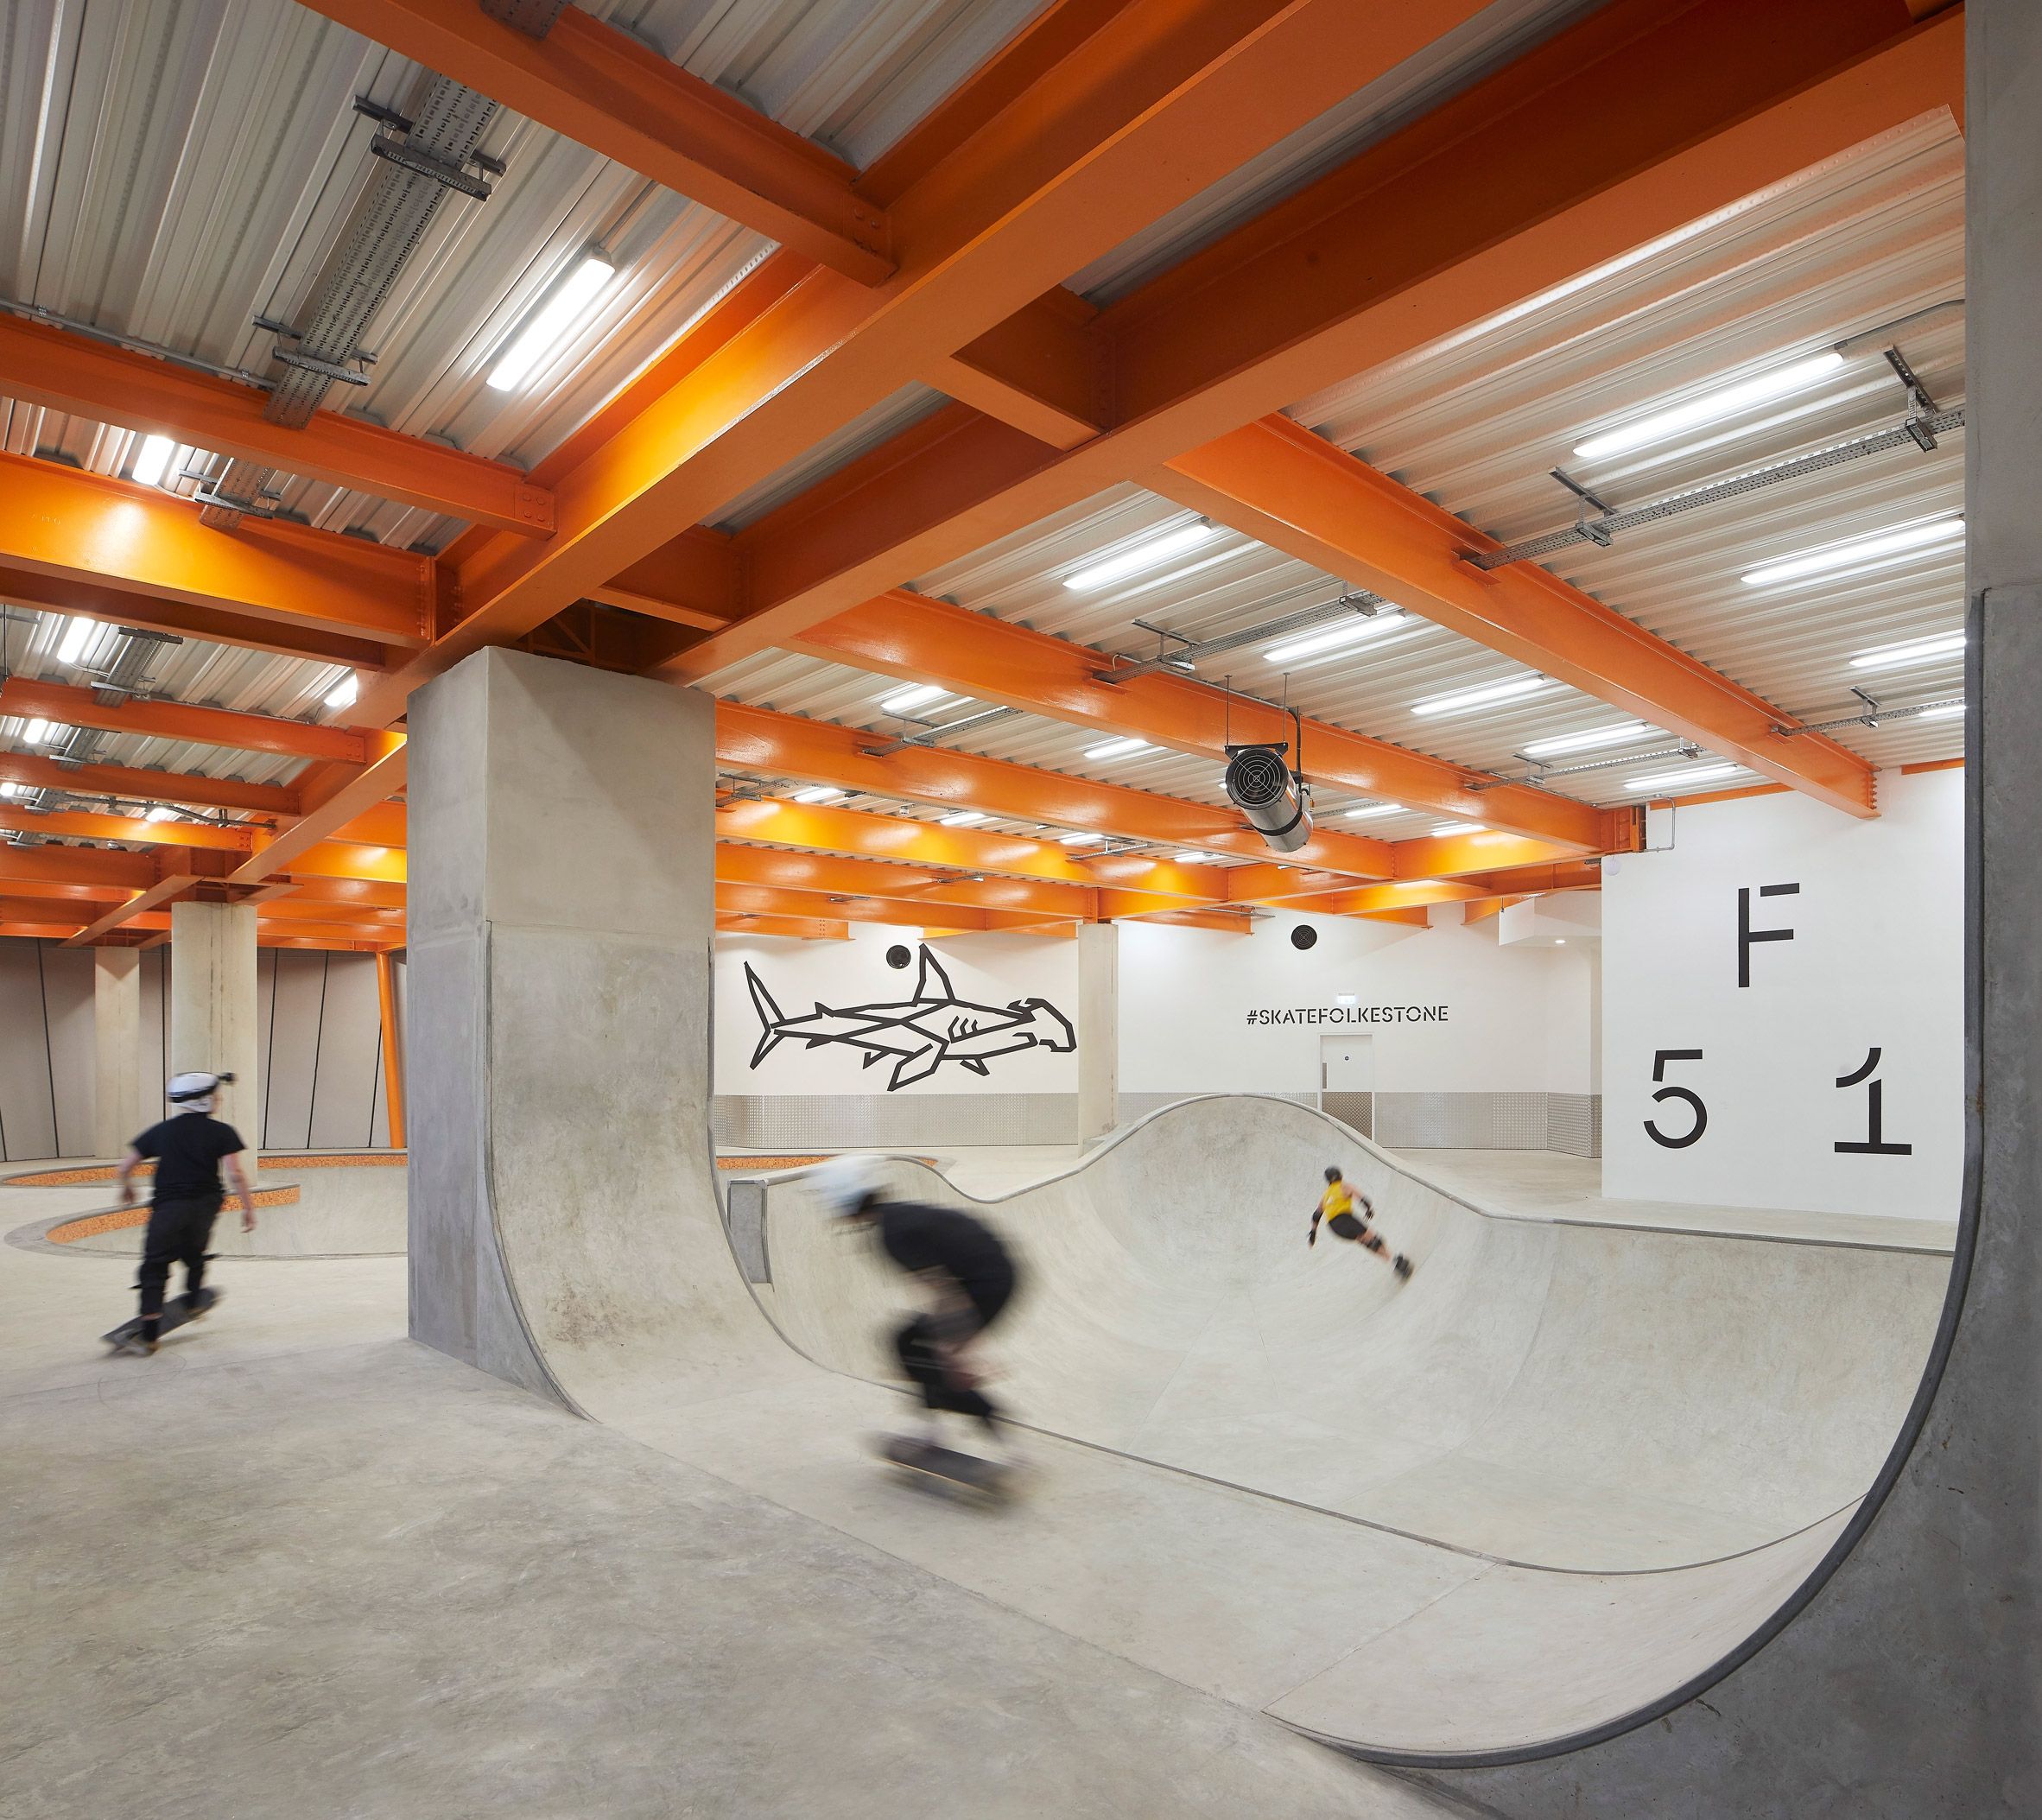 folkestone skatepark review tips skateboarding in kent u k